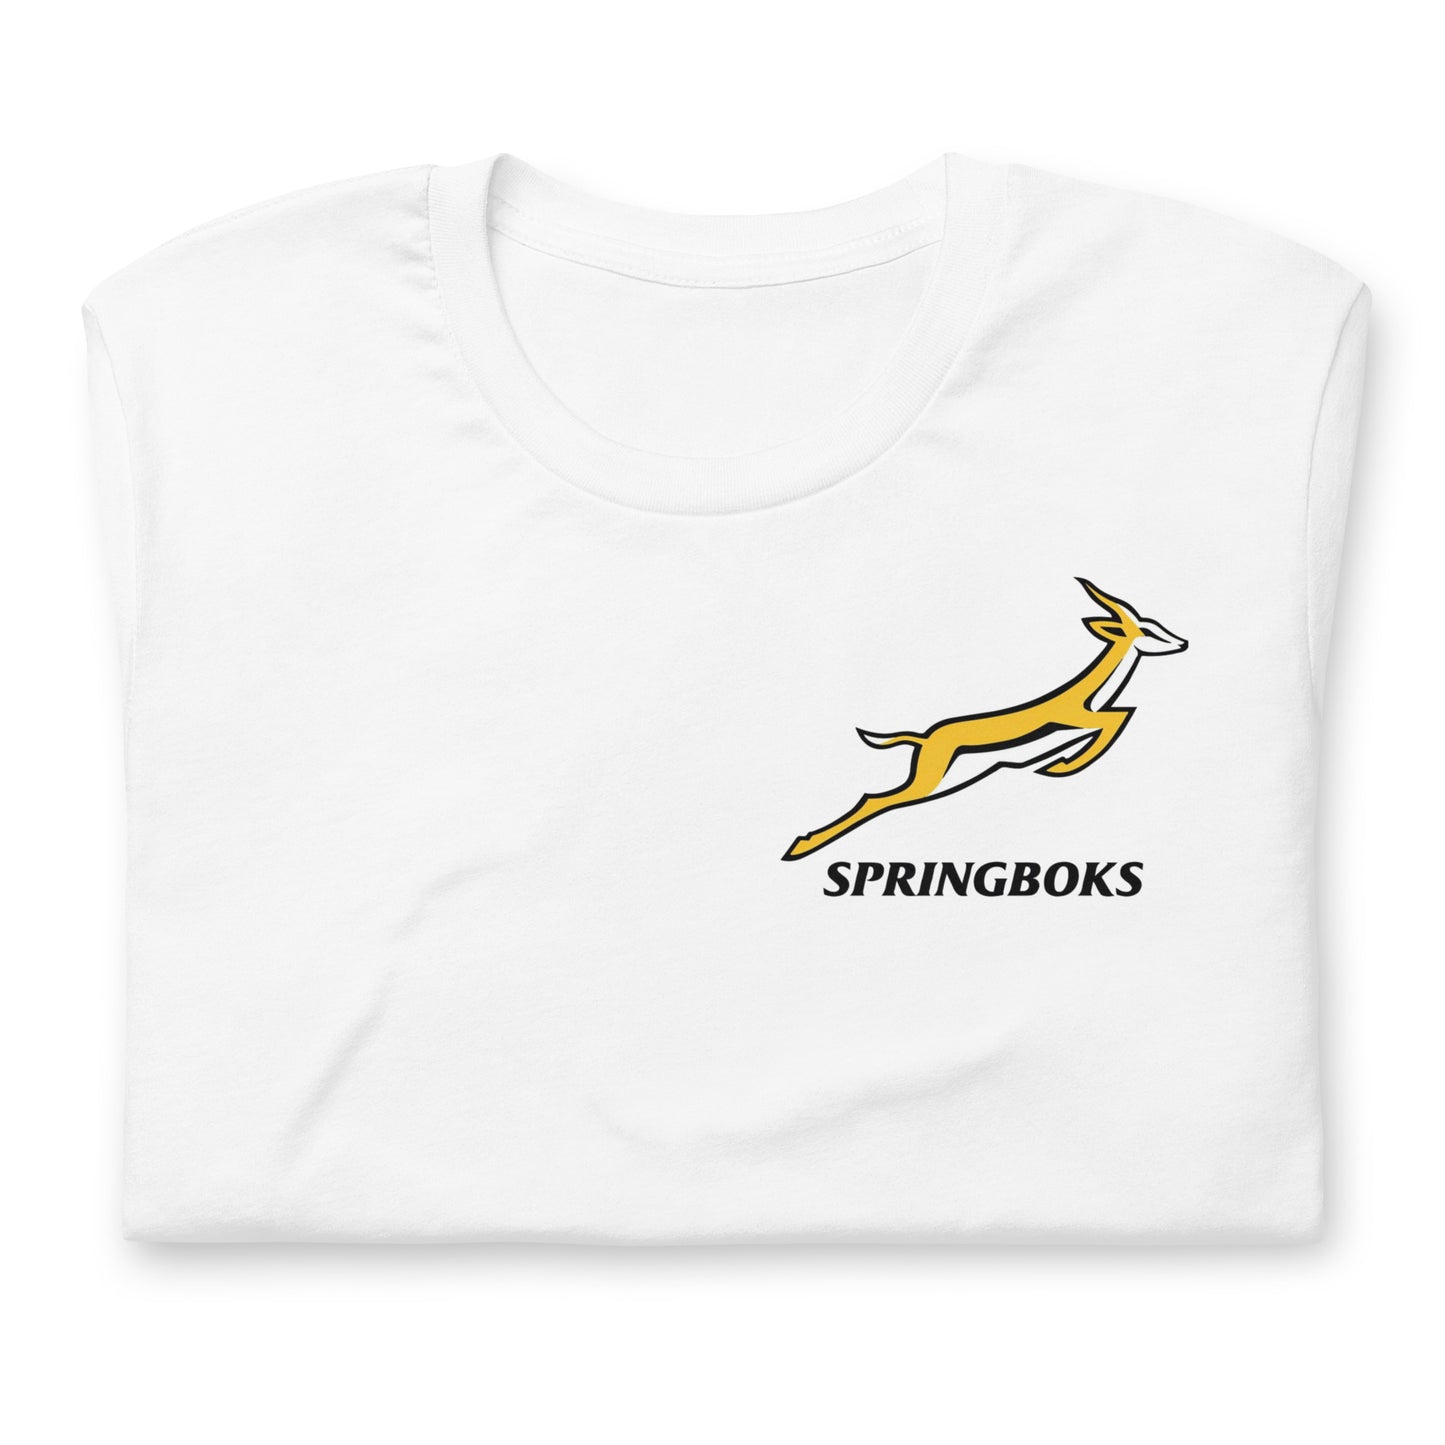 Springboks Supporters Tee